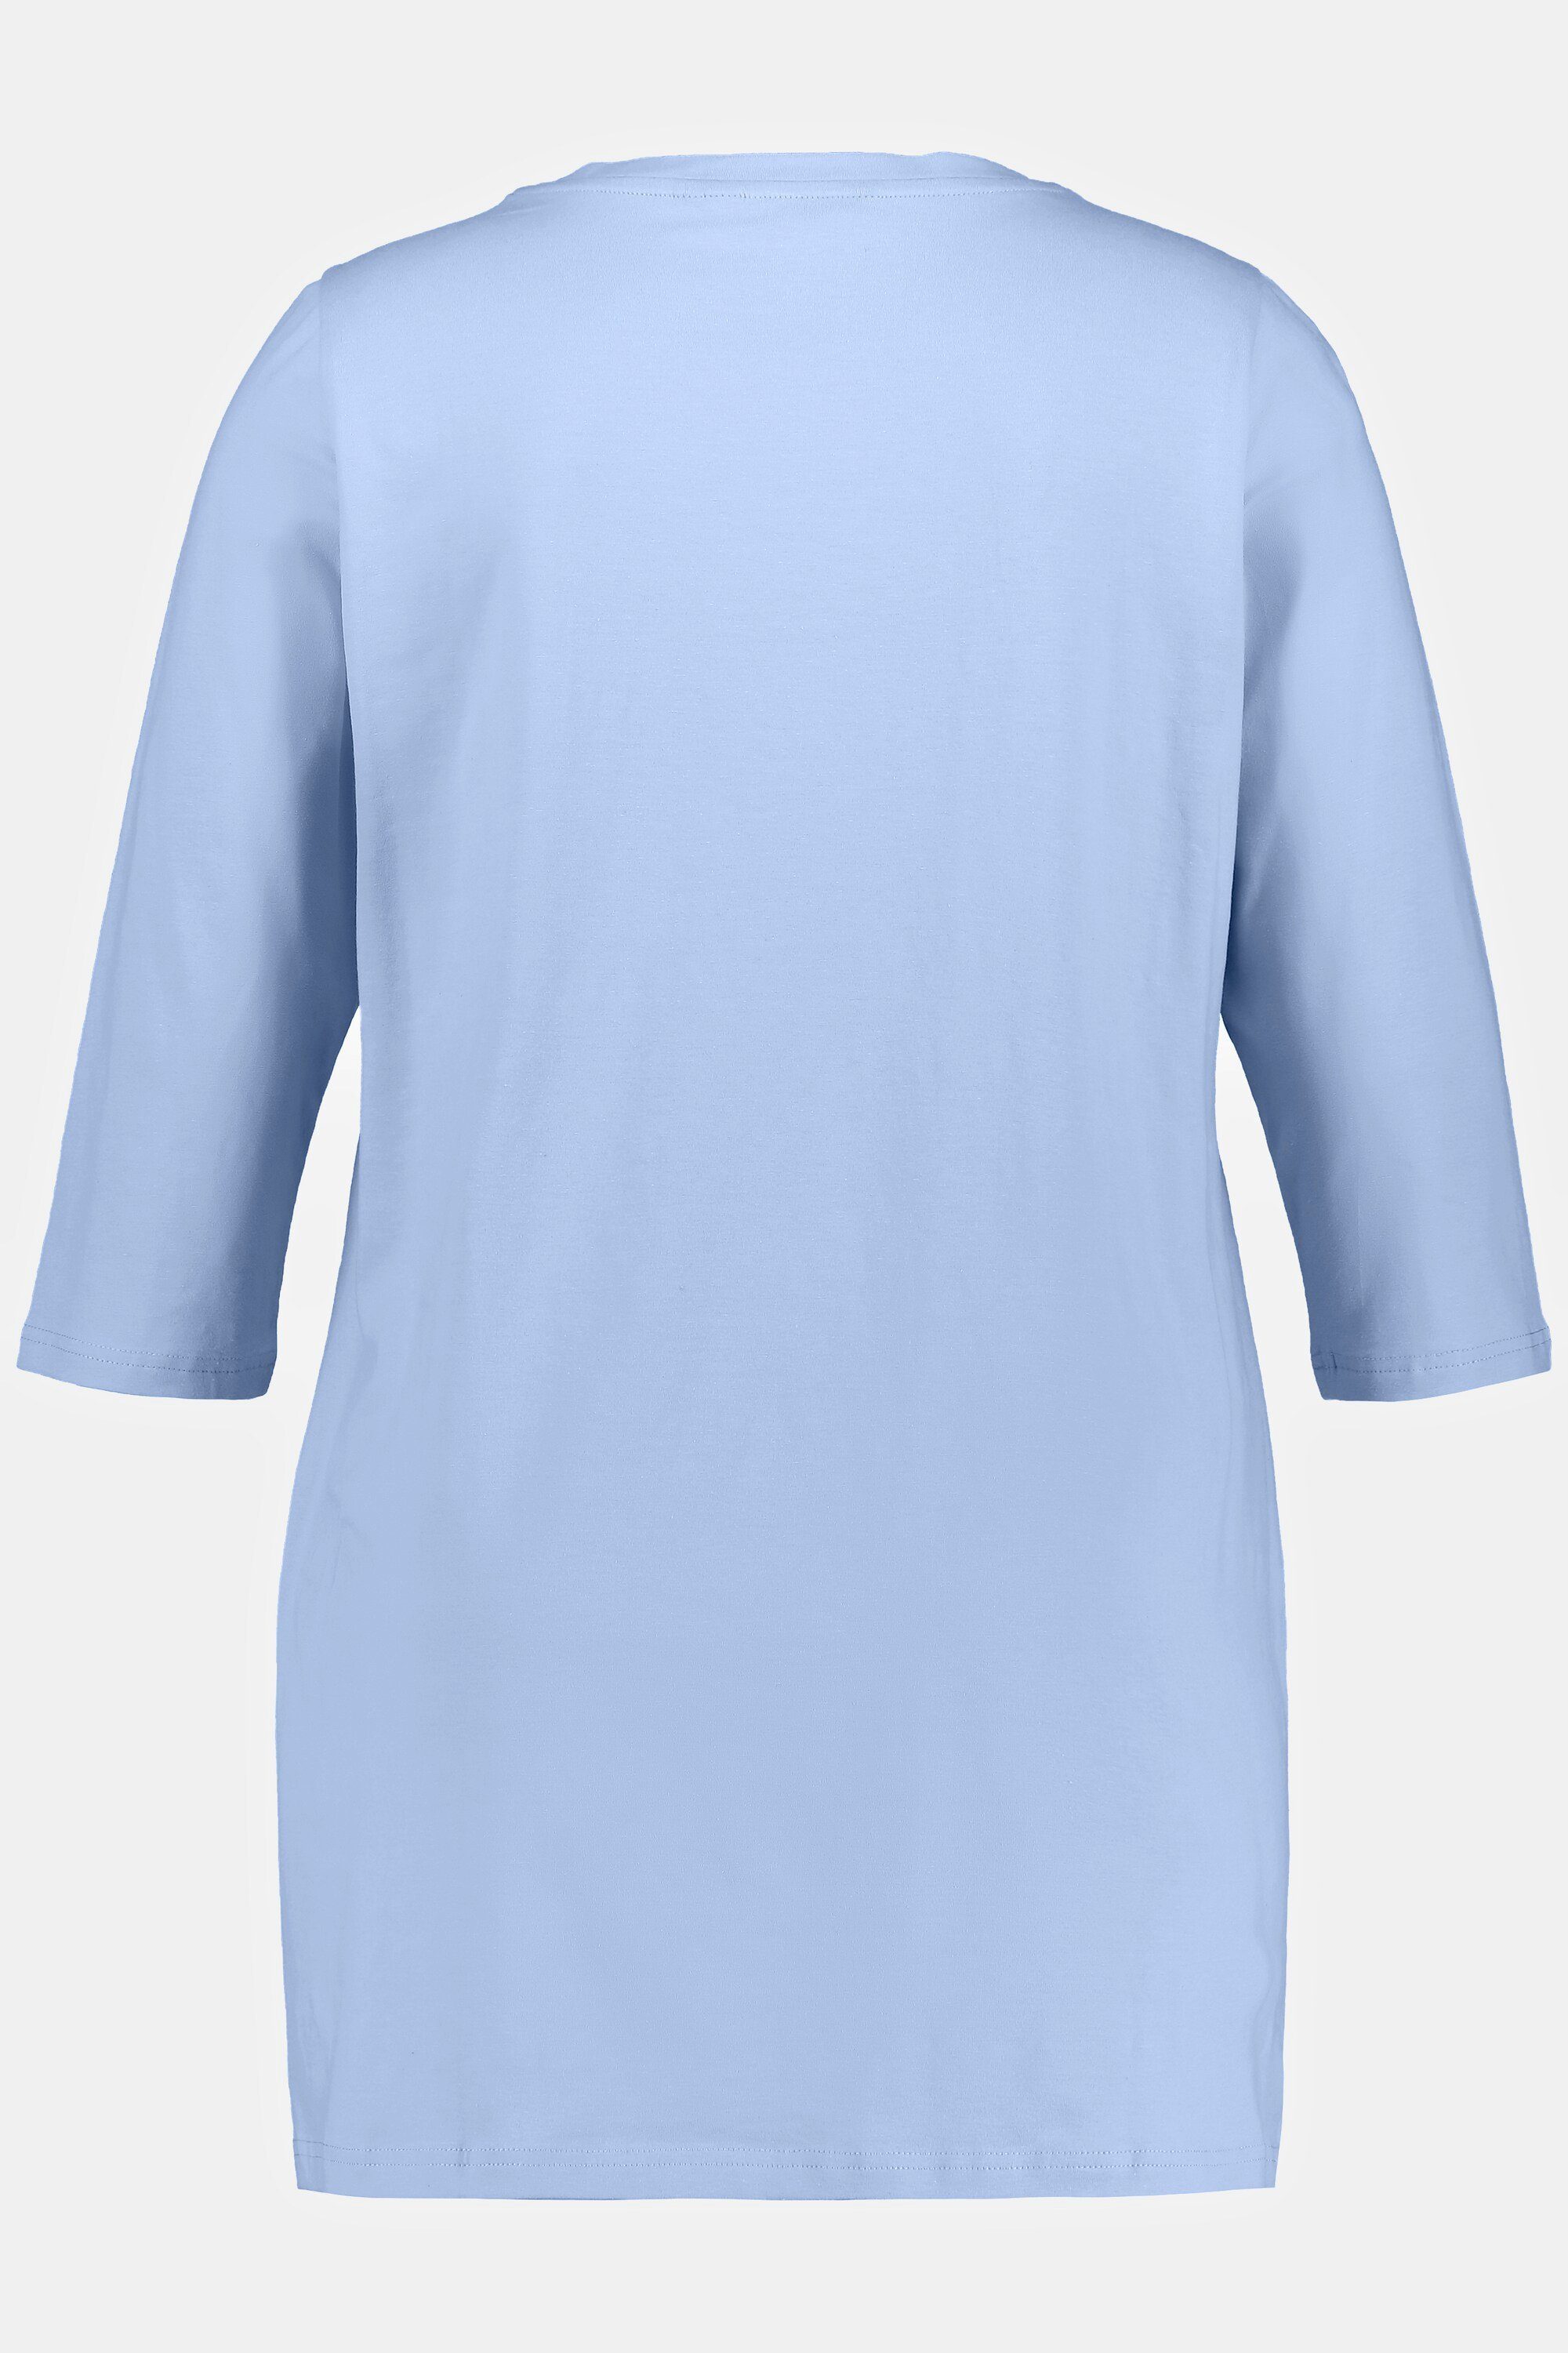 Popken Zierbänder V-Ausschnitt Rundhalsshirt Ulla 3/4-Arm Shirt Classic himmelblau